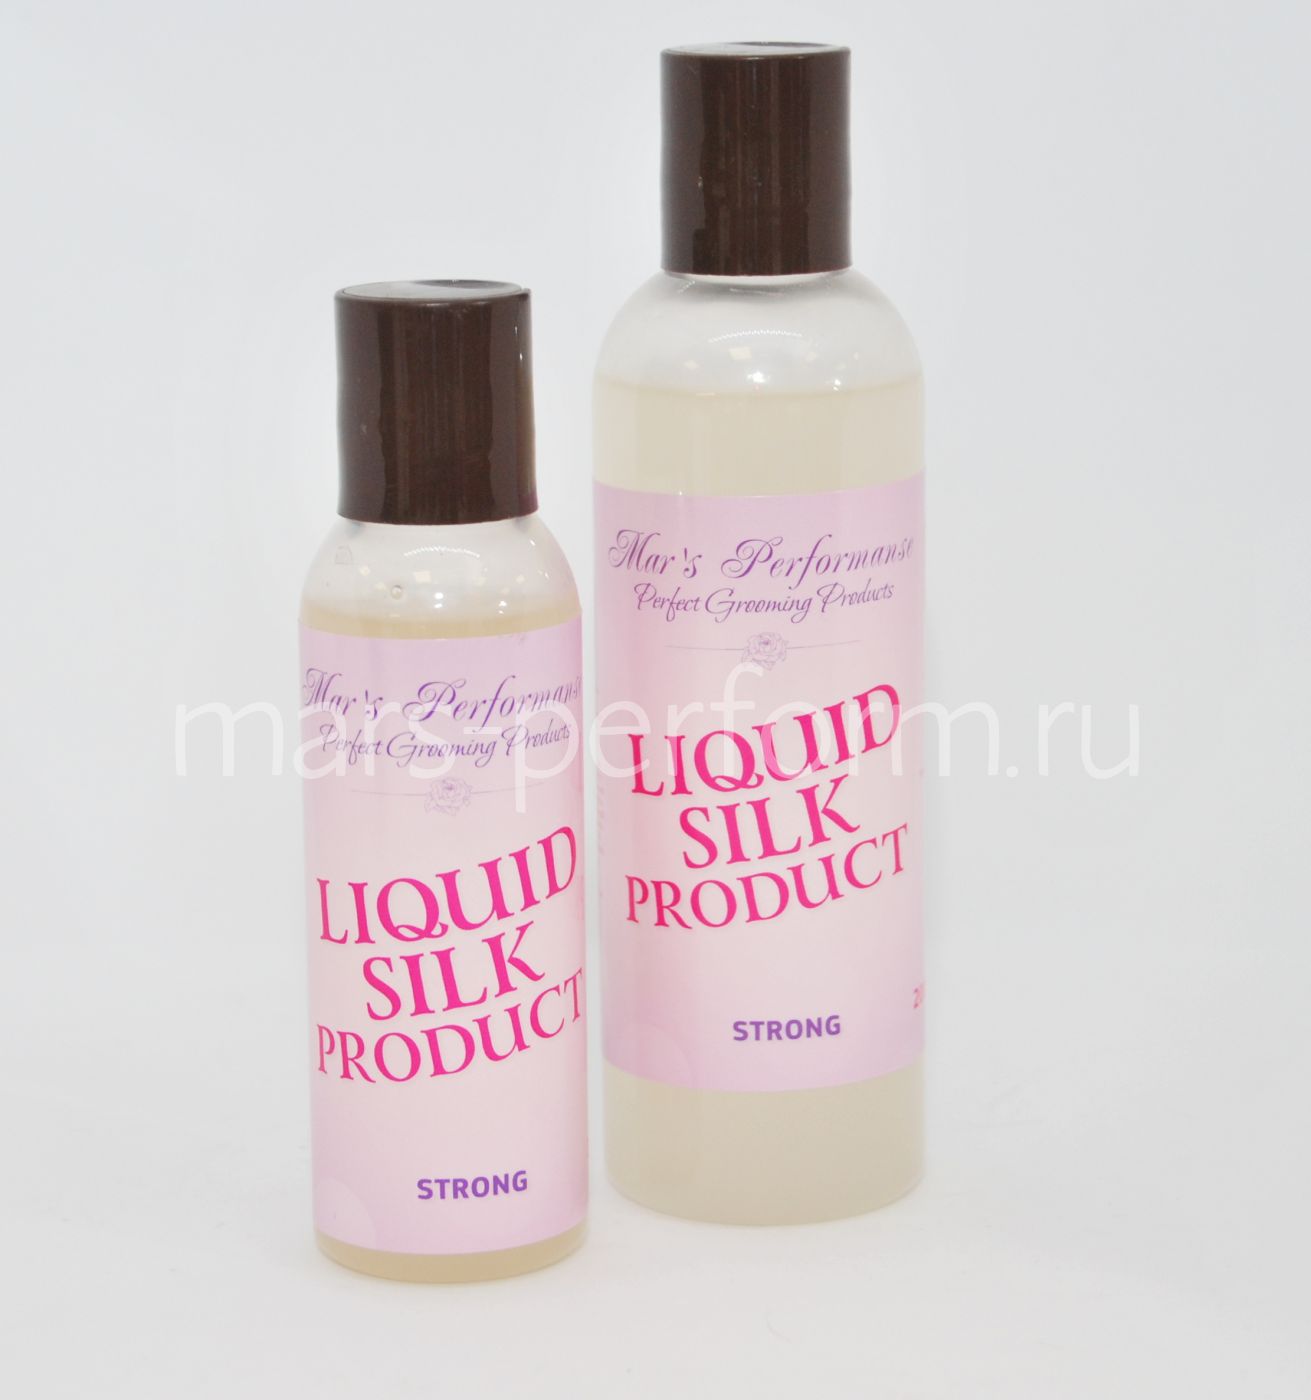 Liquid Silk Product Strong 200 мл